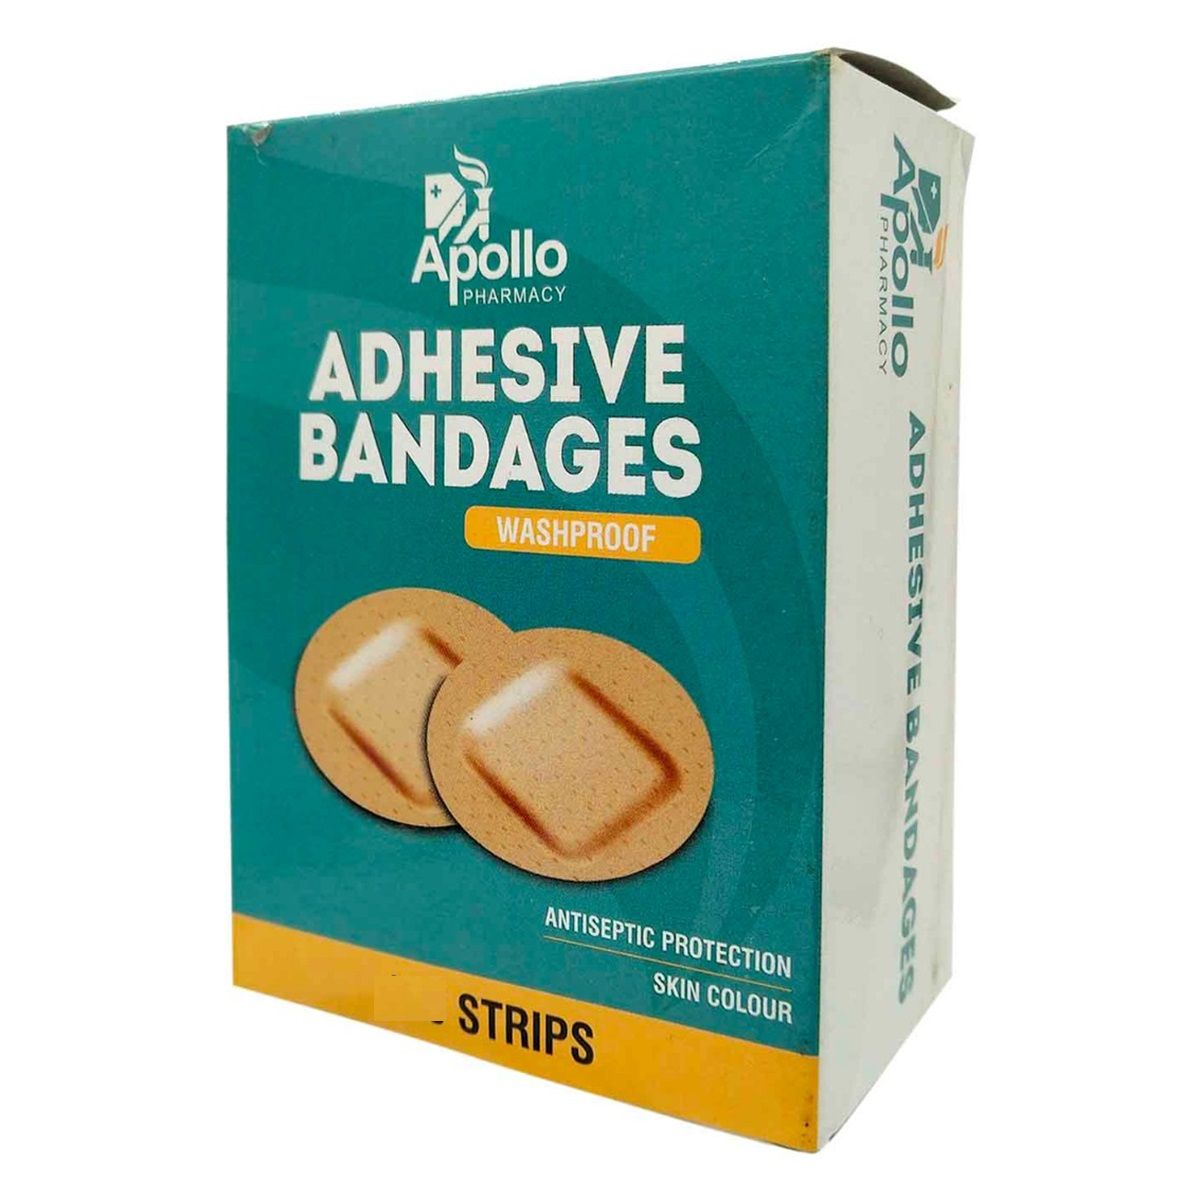 Buy Apollo Pharmacy Adhesive Round Bandage Wash Proof, 1 Count Online